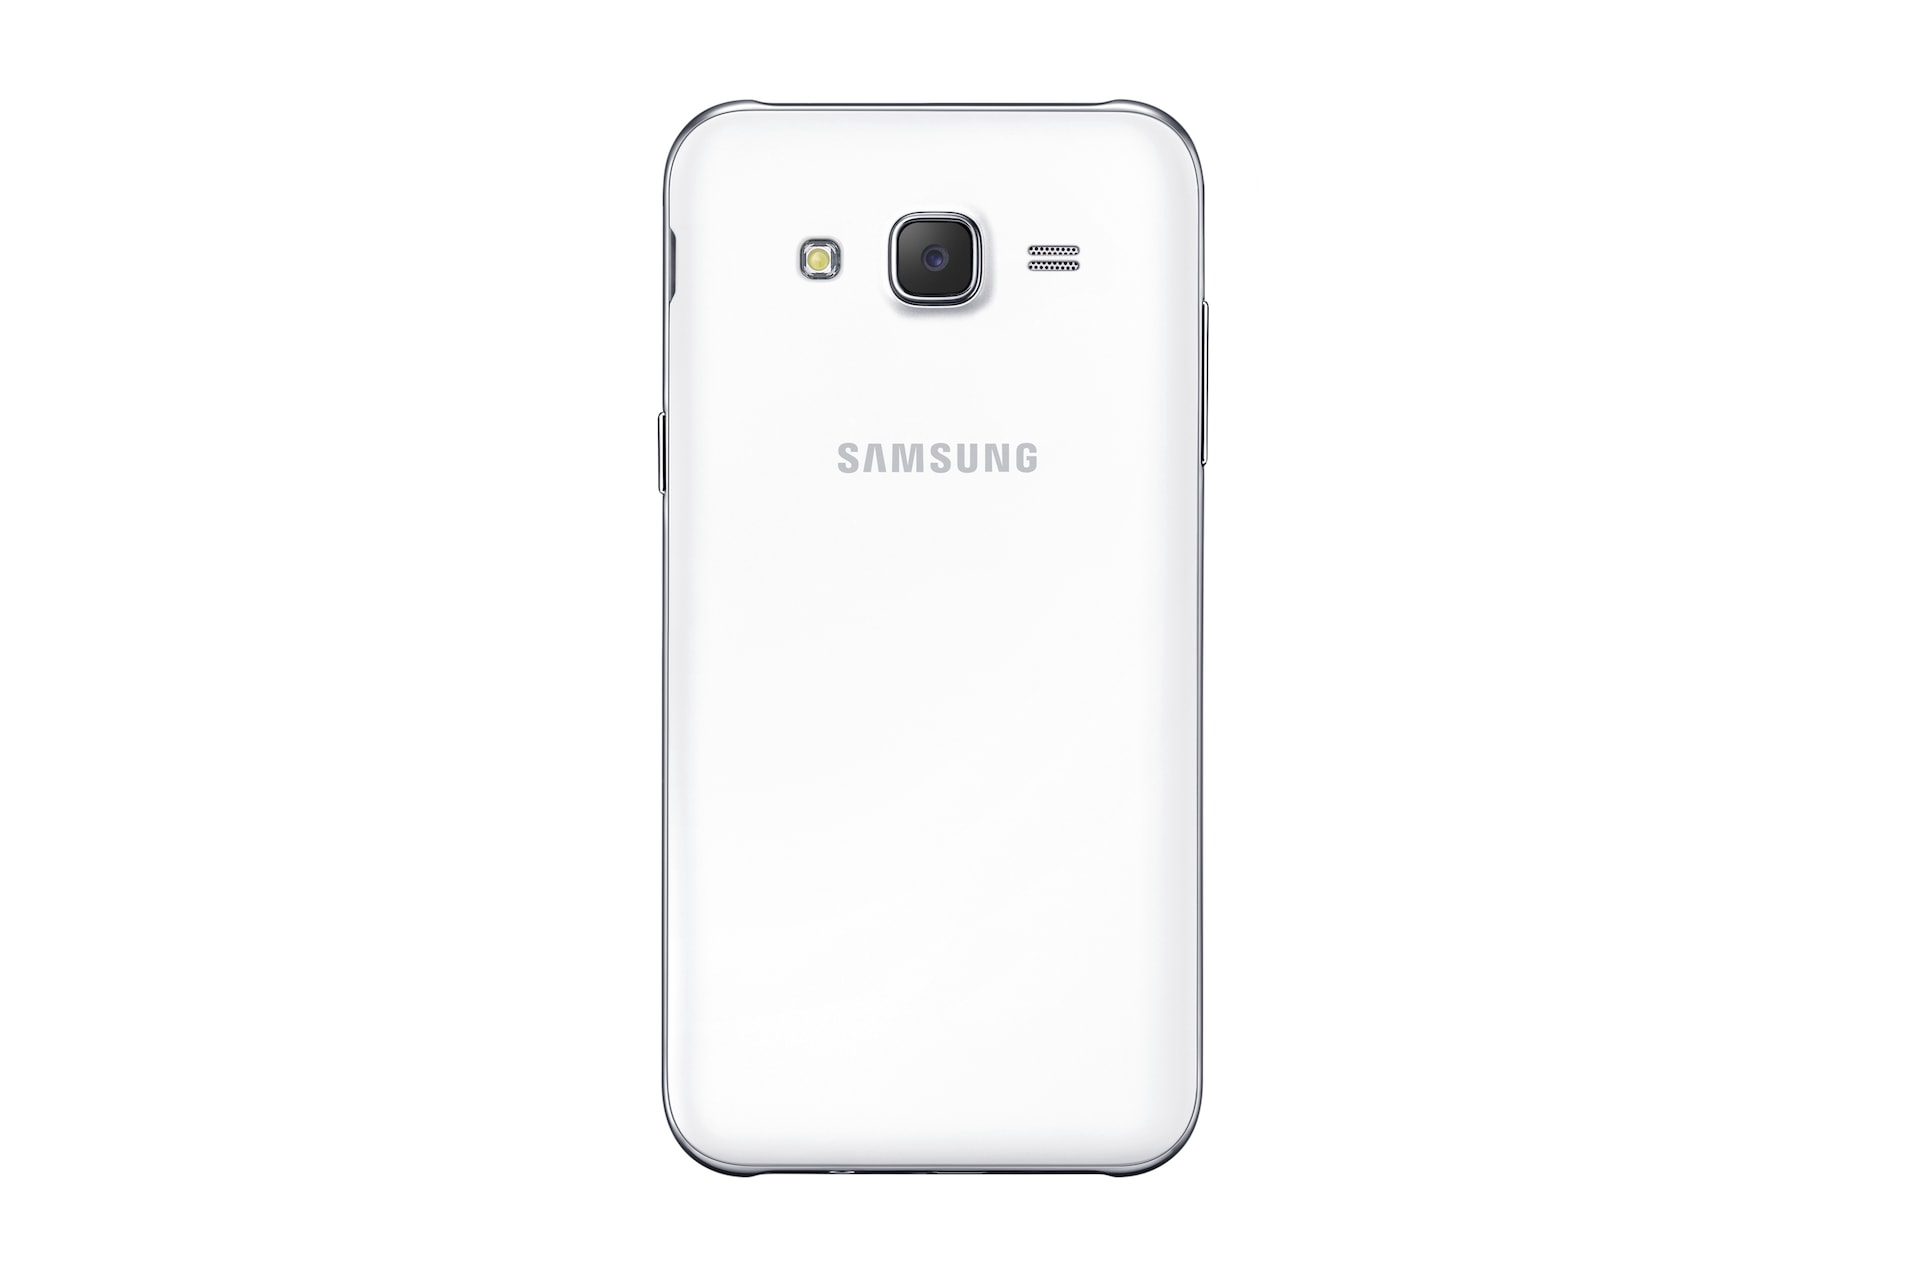 Samsung Galaxy J5 Price, New Galaxy J5 4G Dual Sim Smartphone, Features, Specs